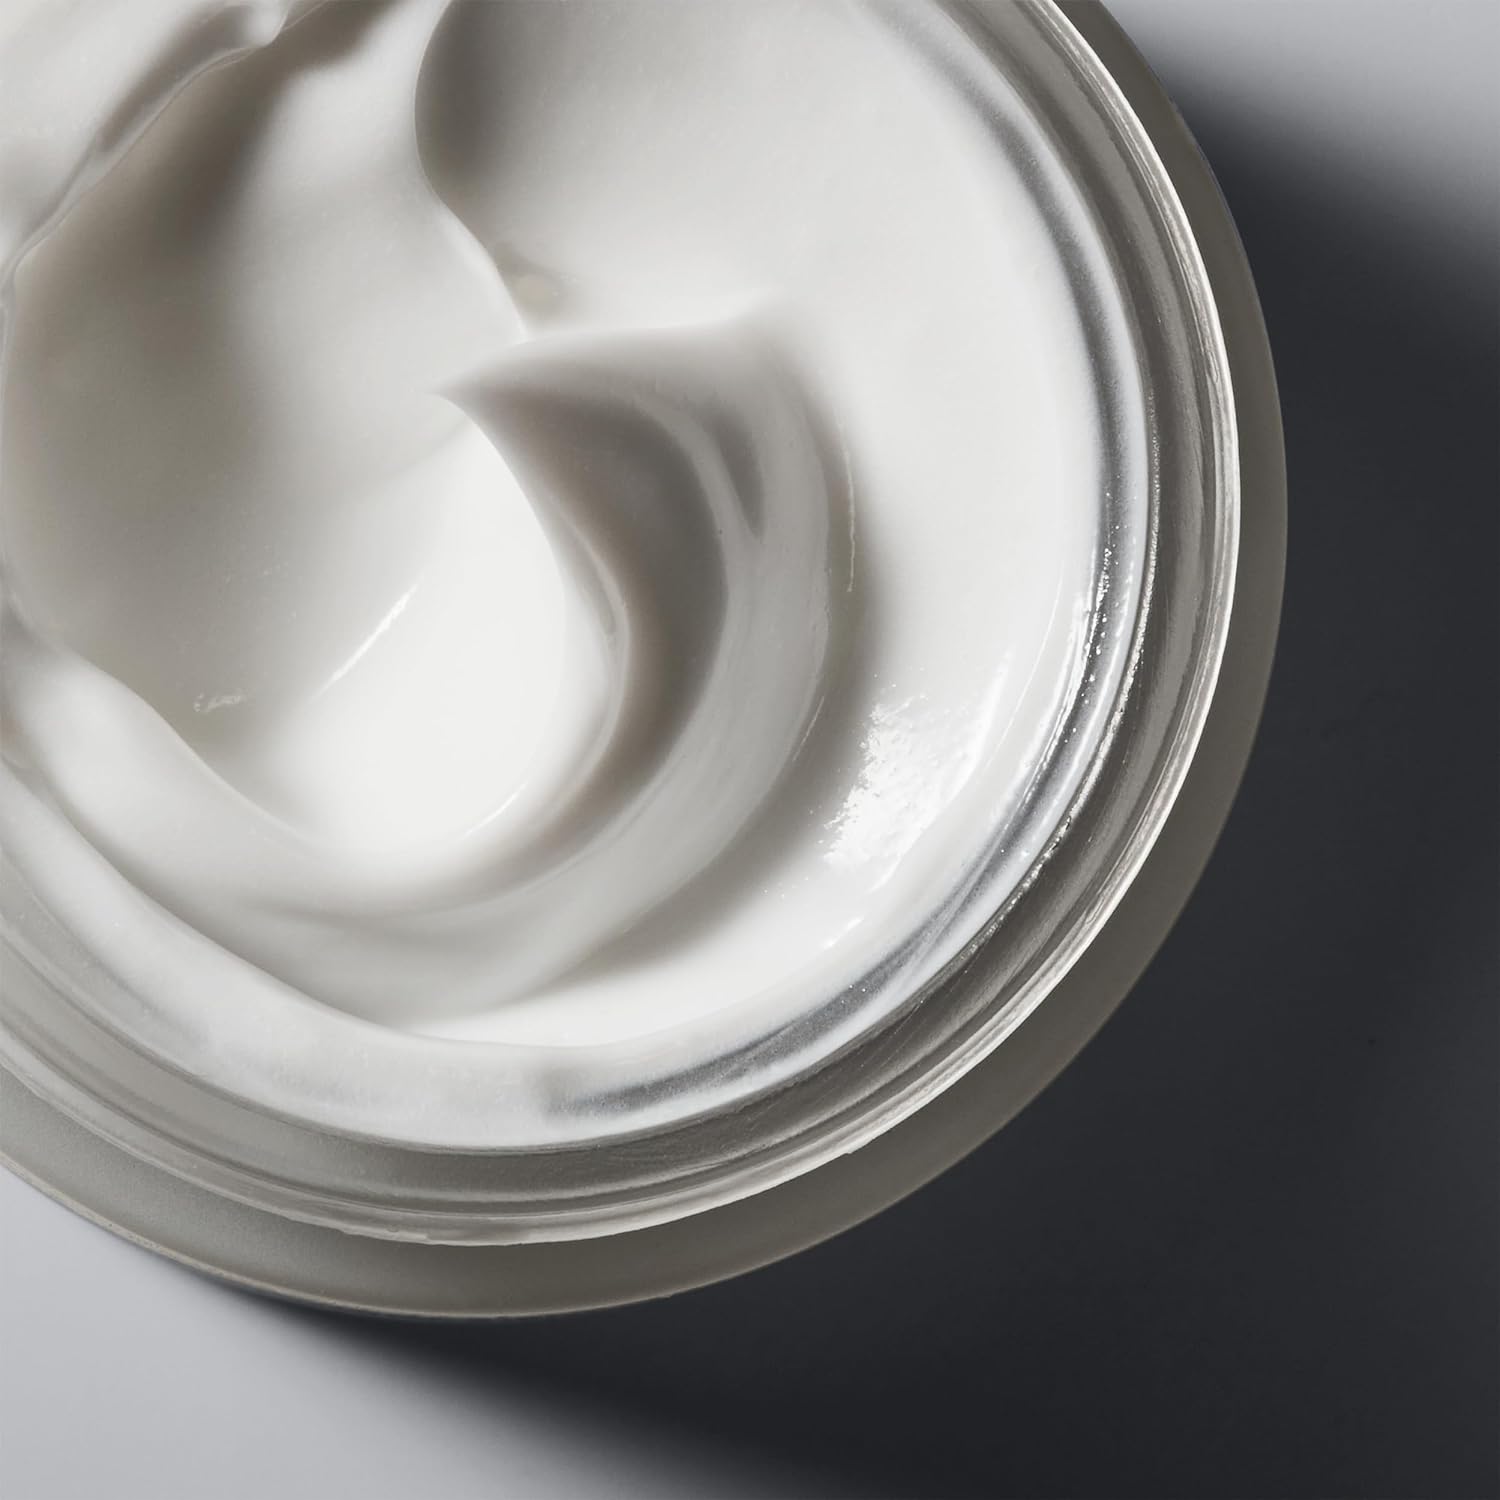 philosophy hope in a jar - eye & lip cream & smooth glow multi tasking moisturizer : Beauty & Personal Care